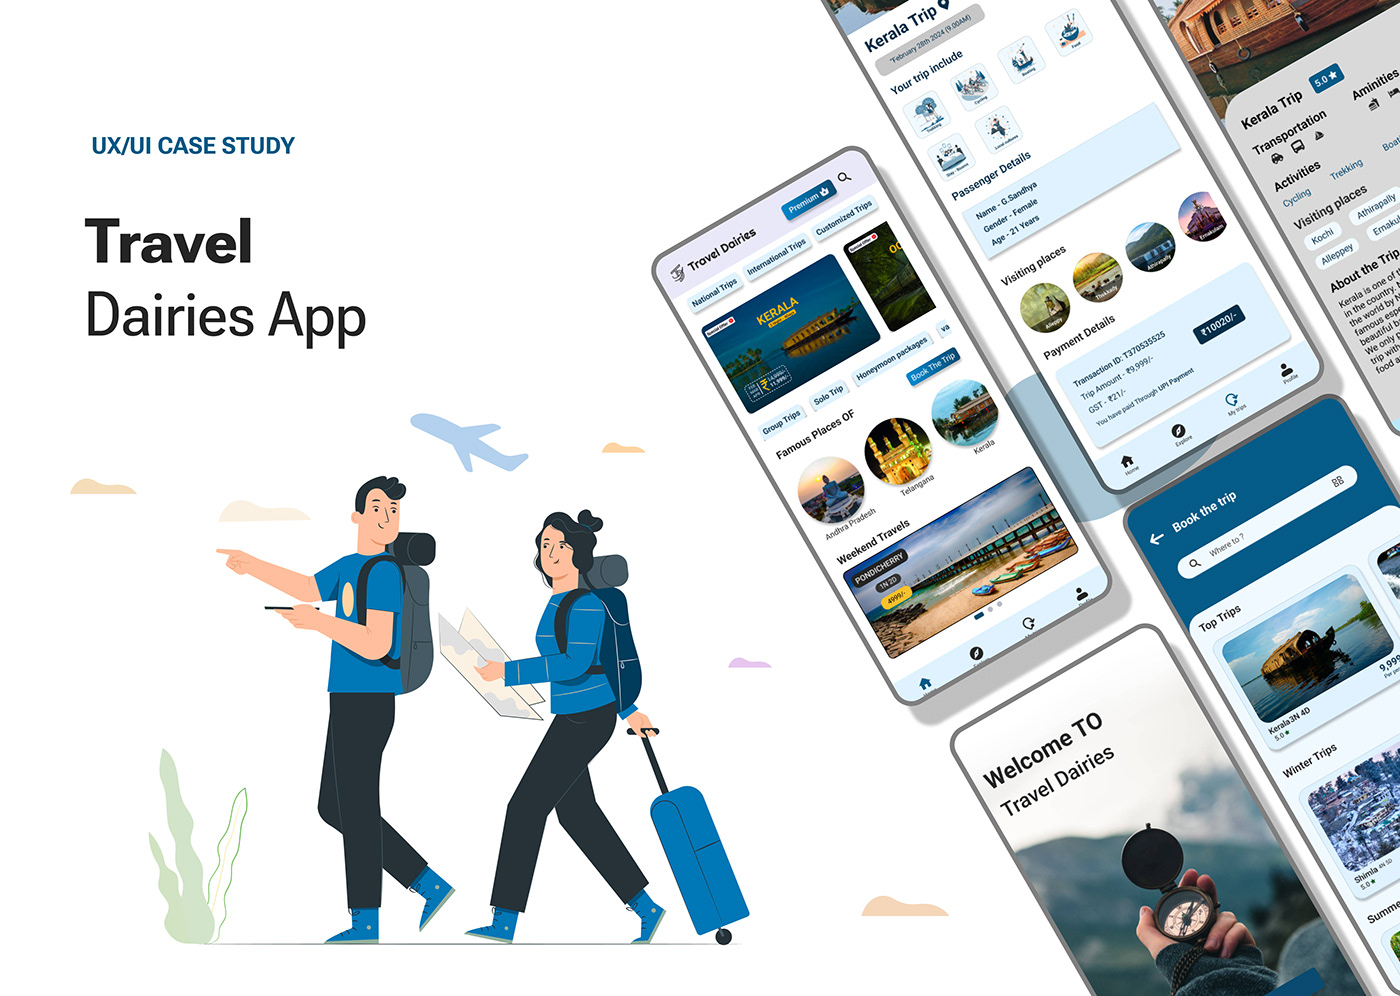 Travel CaseStudy UxUIdesign Mobile app user interface portfolio